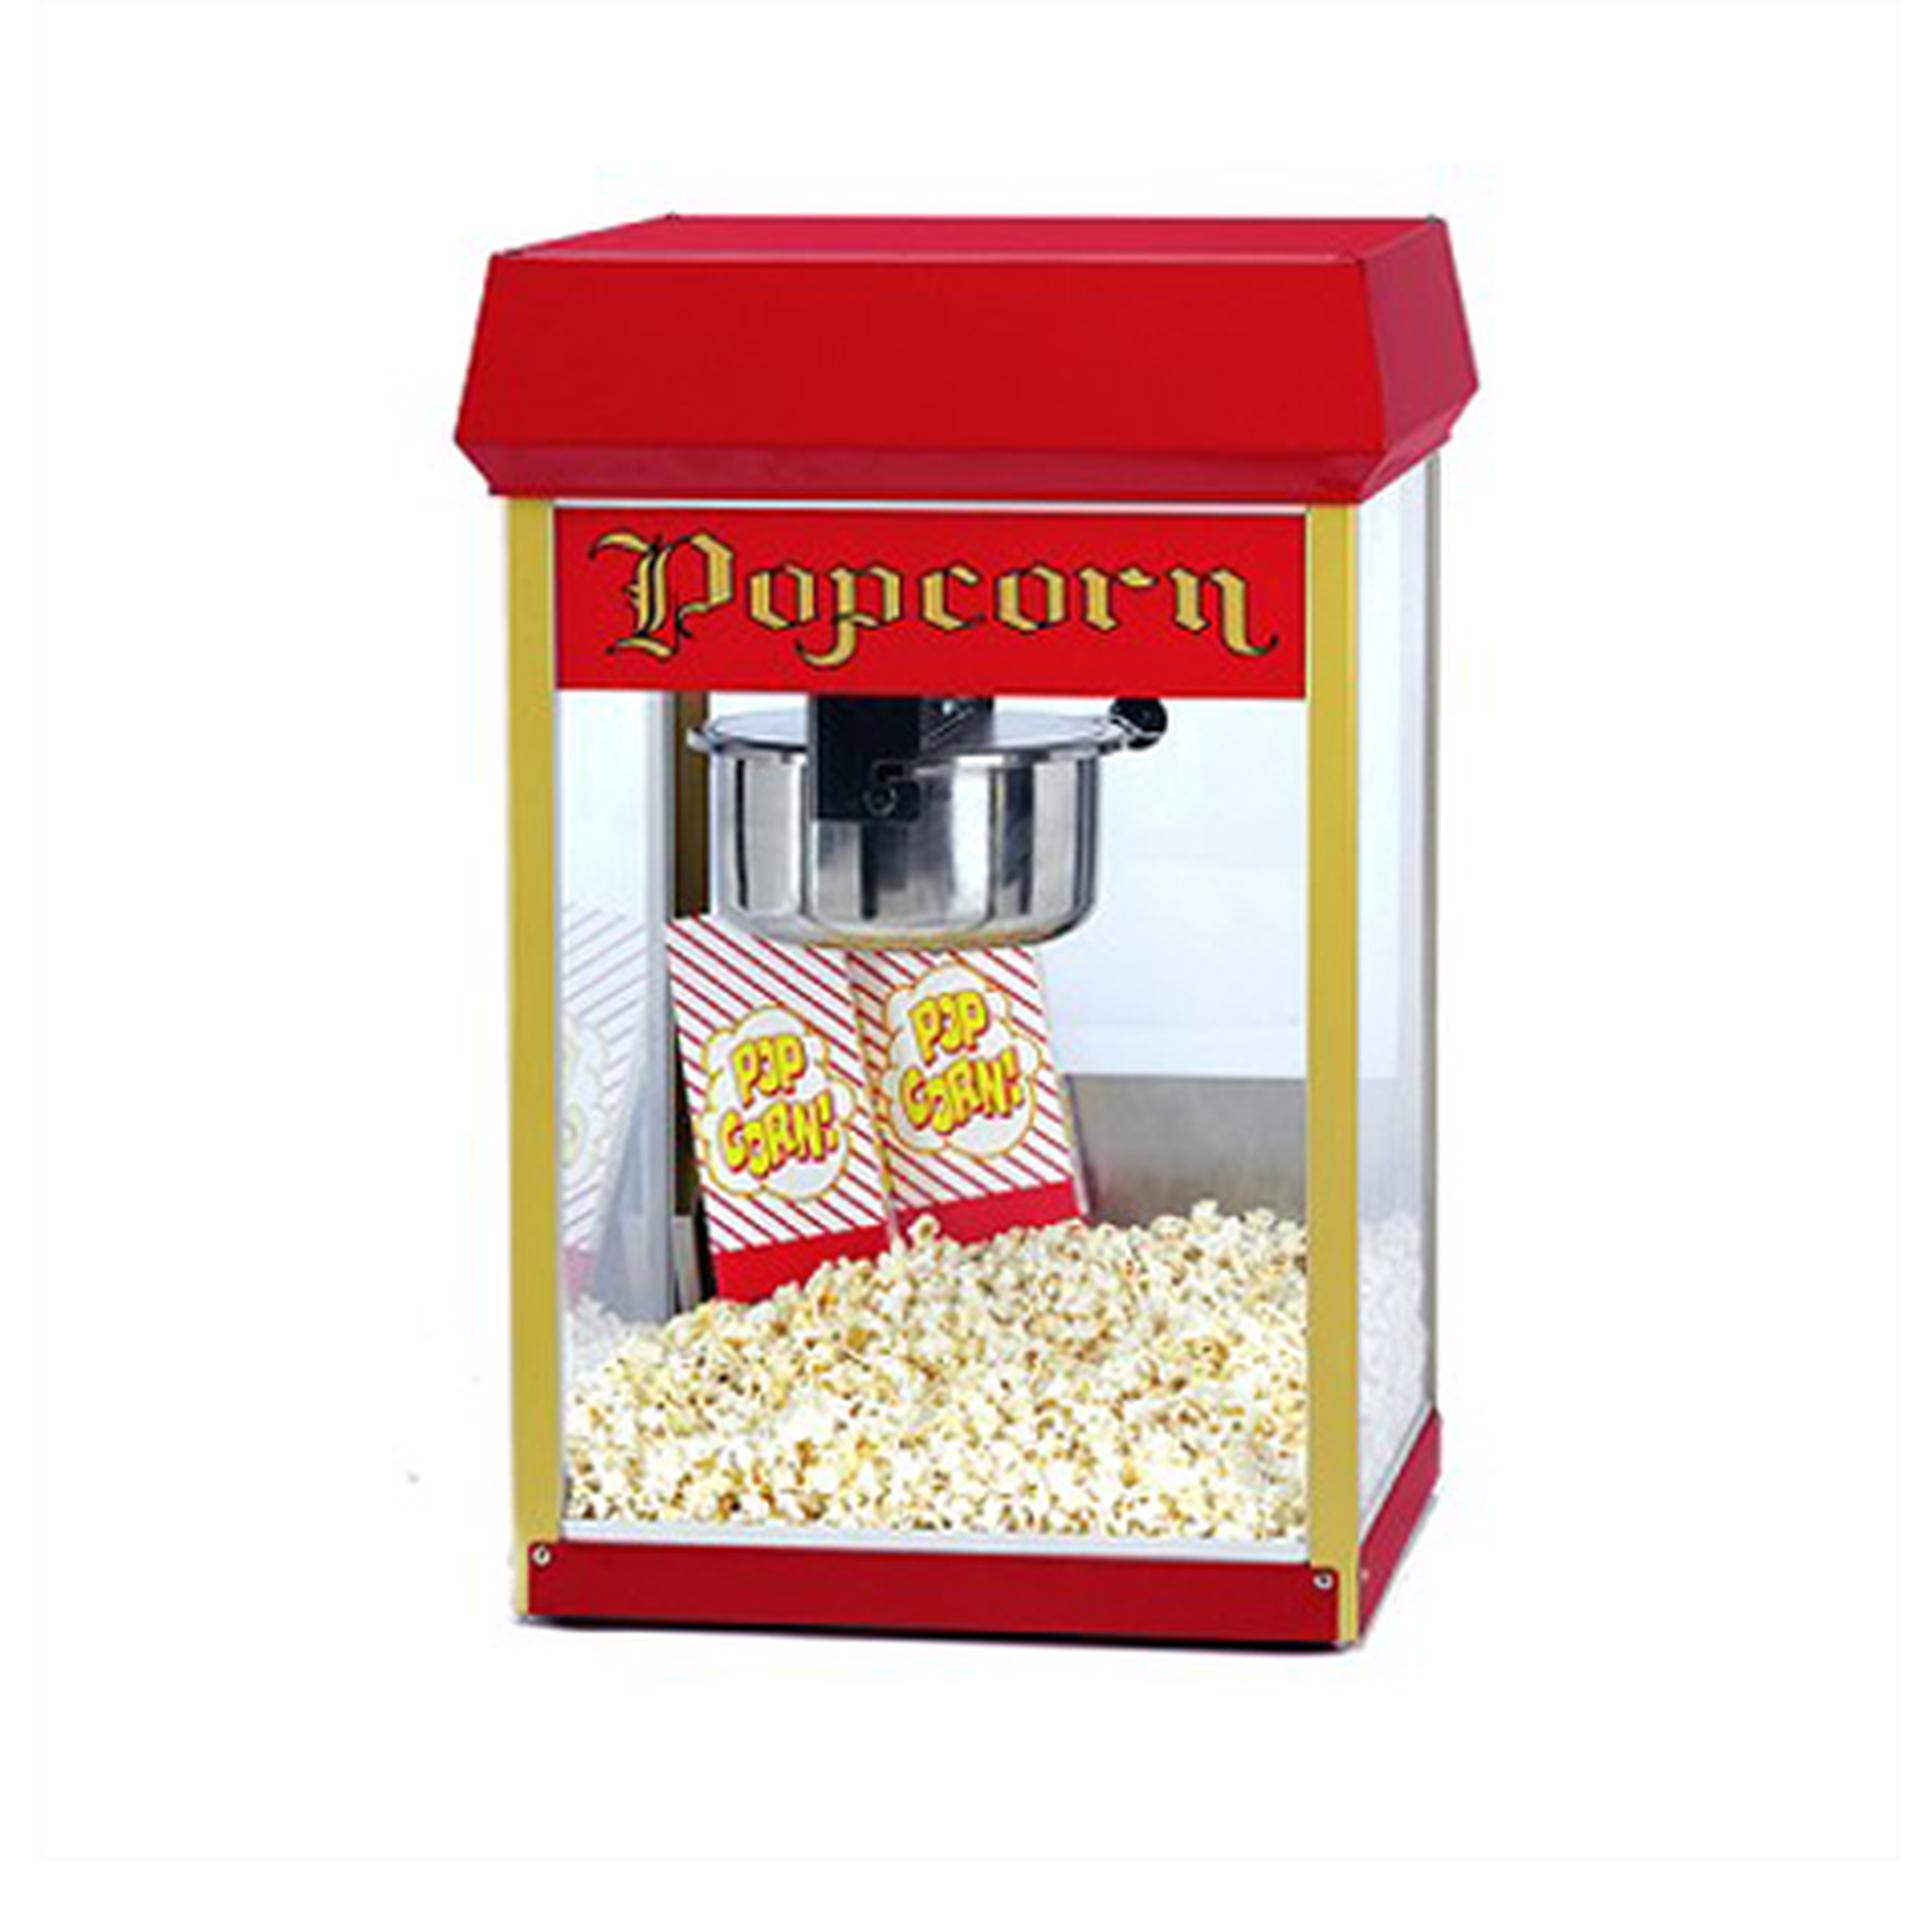 Popcornmaschine Fun Pop 4oz